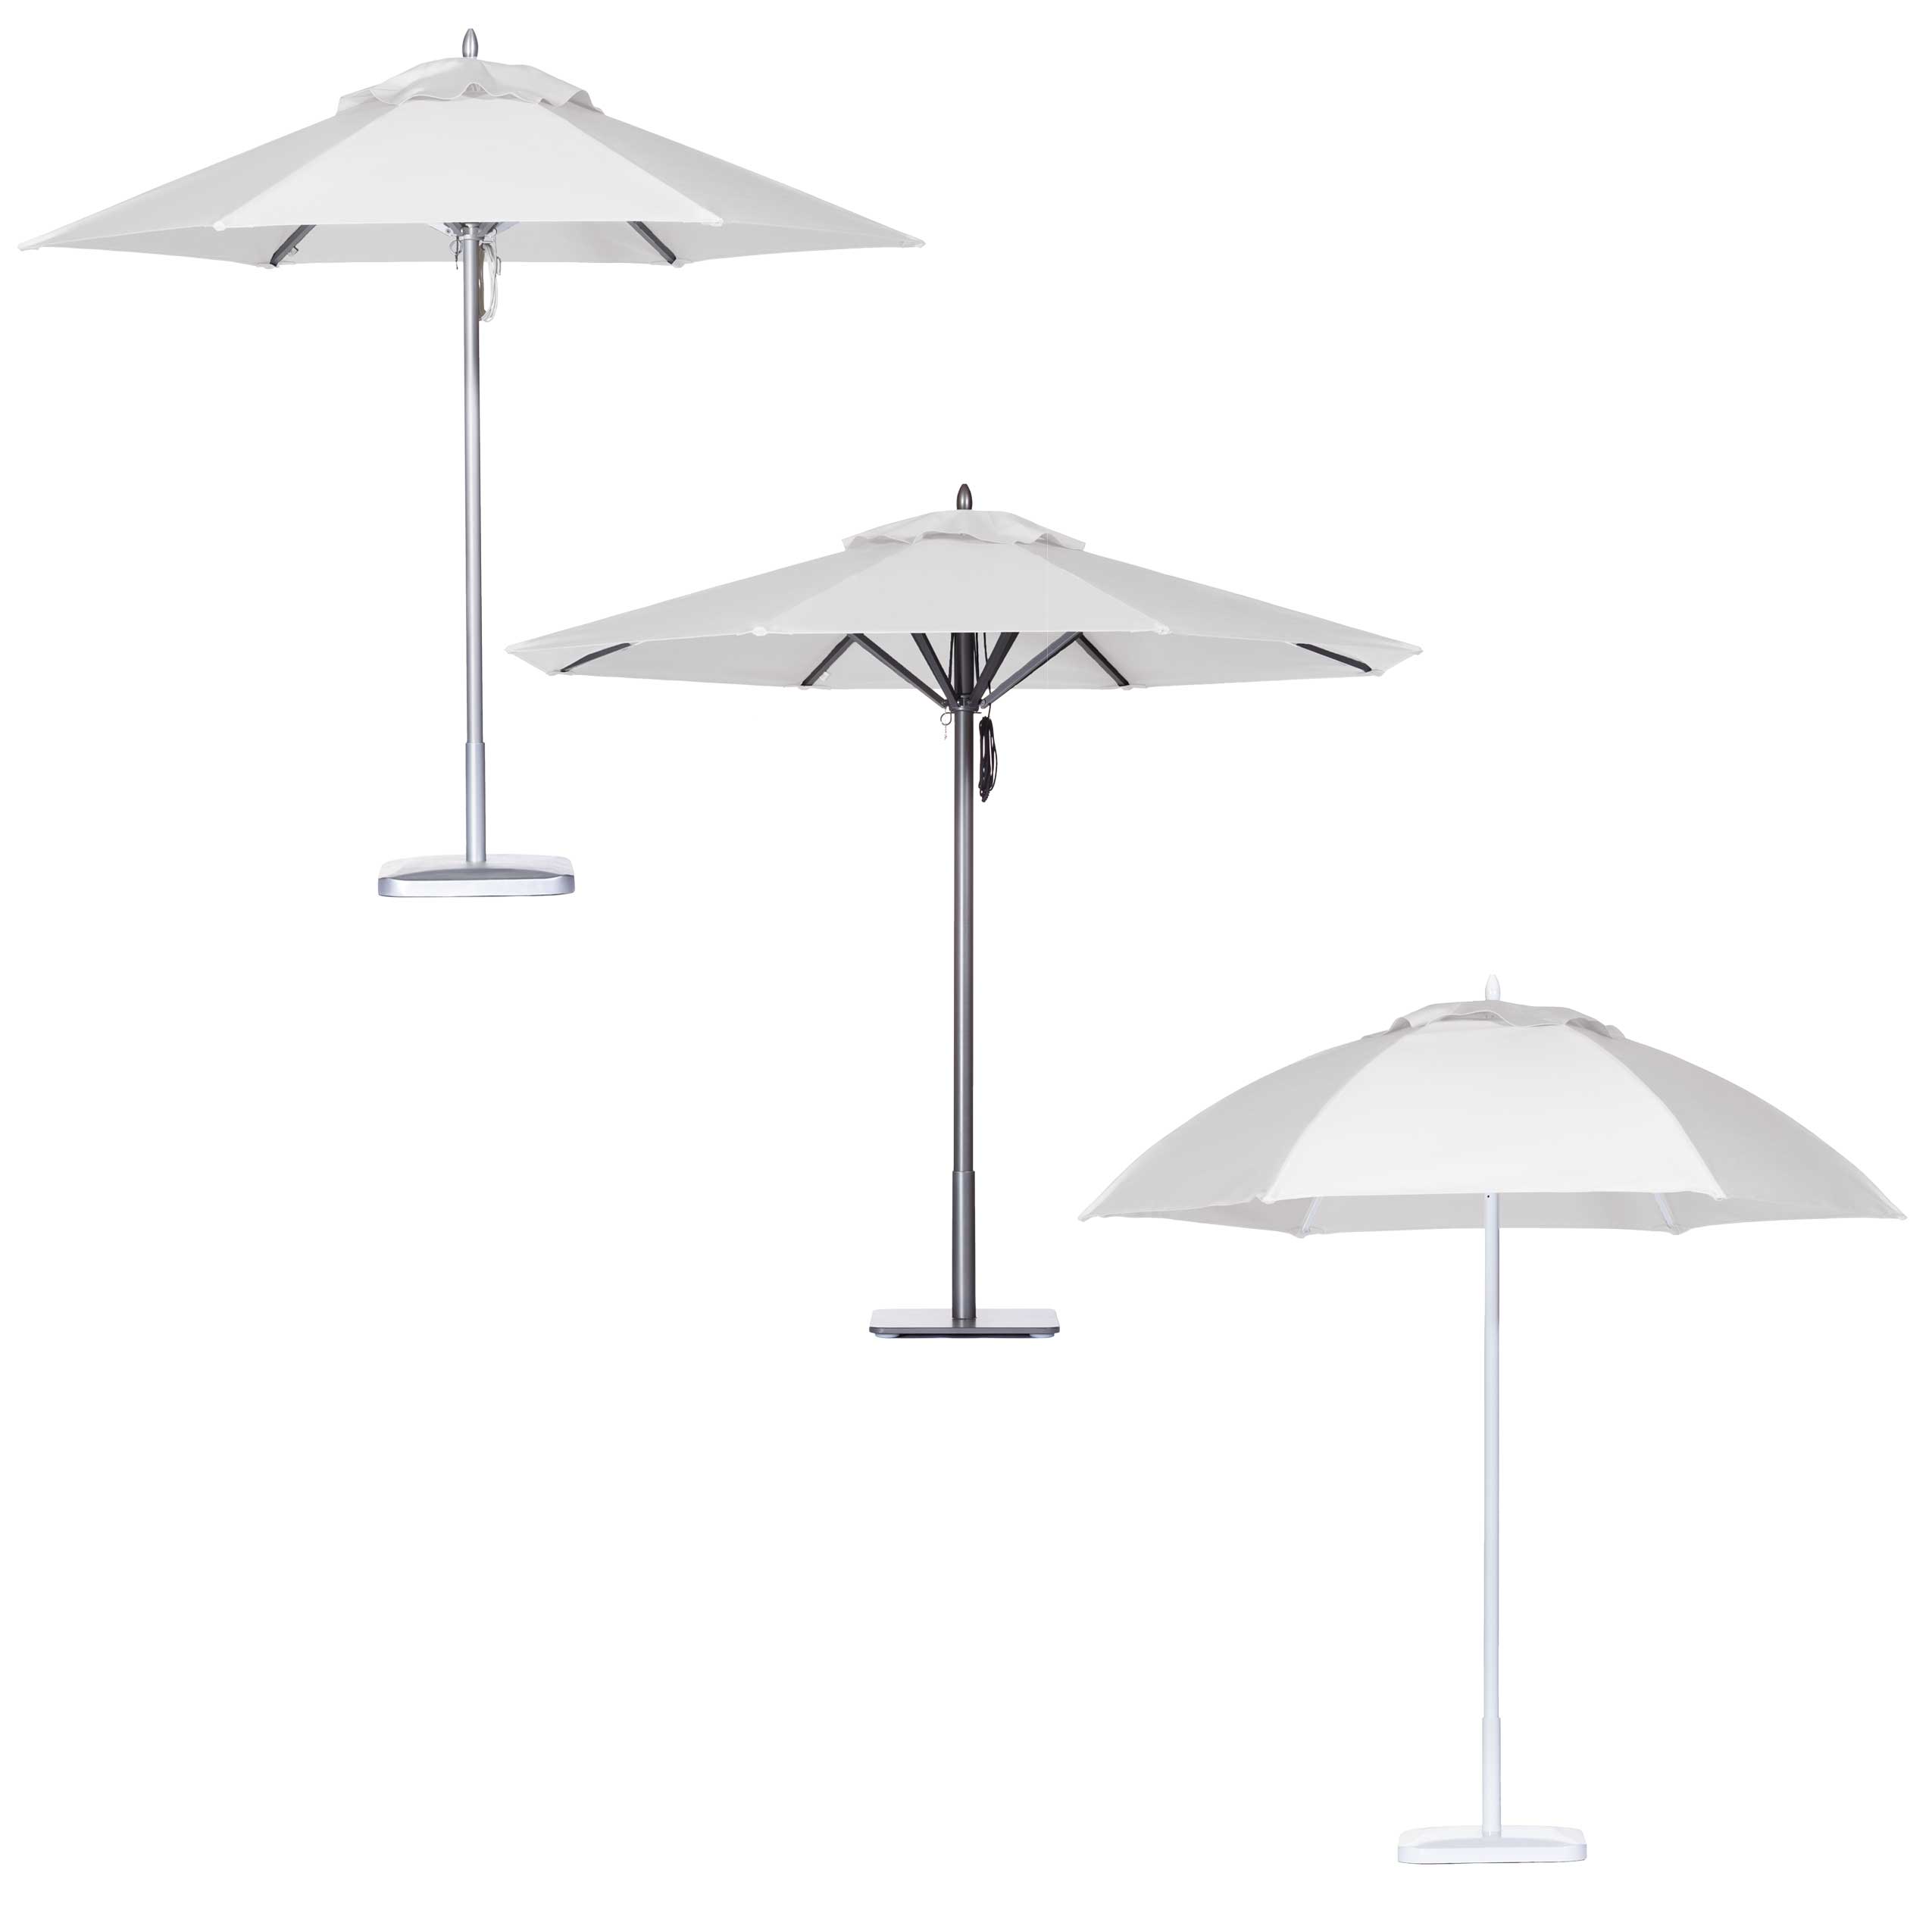 Image of 3 metal umbrellas